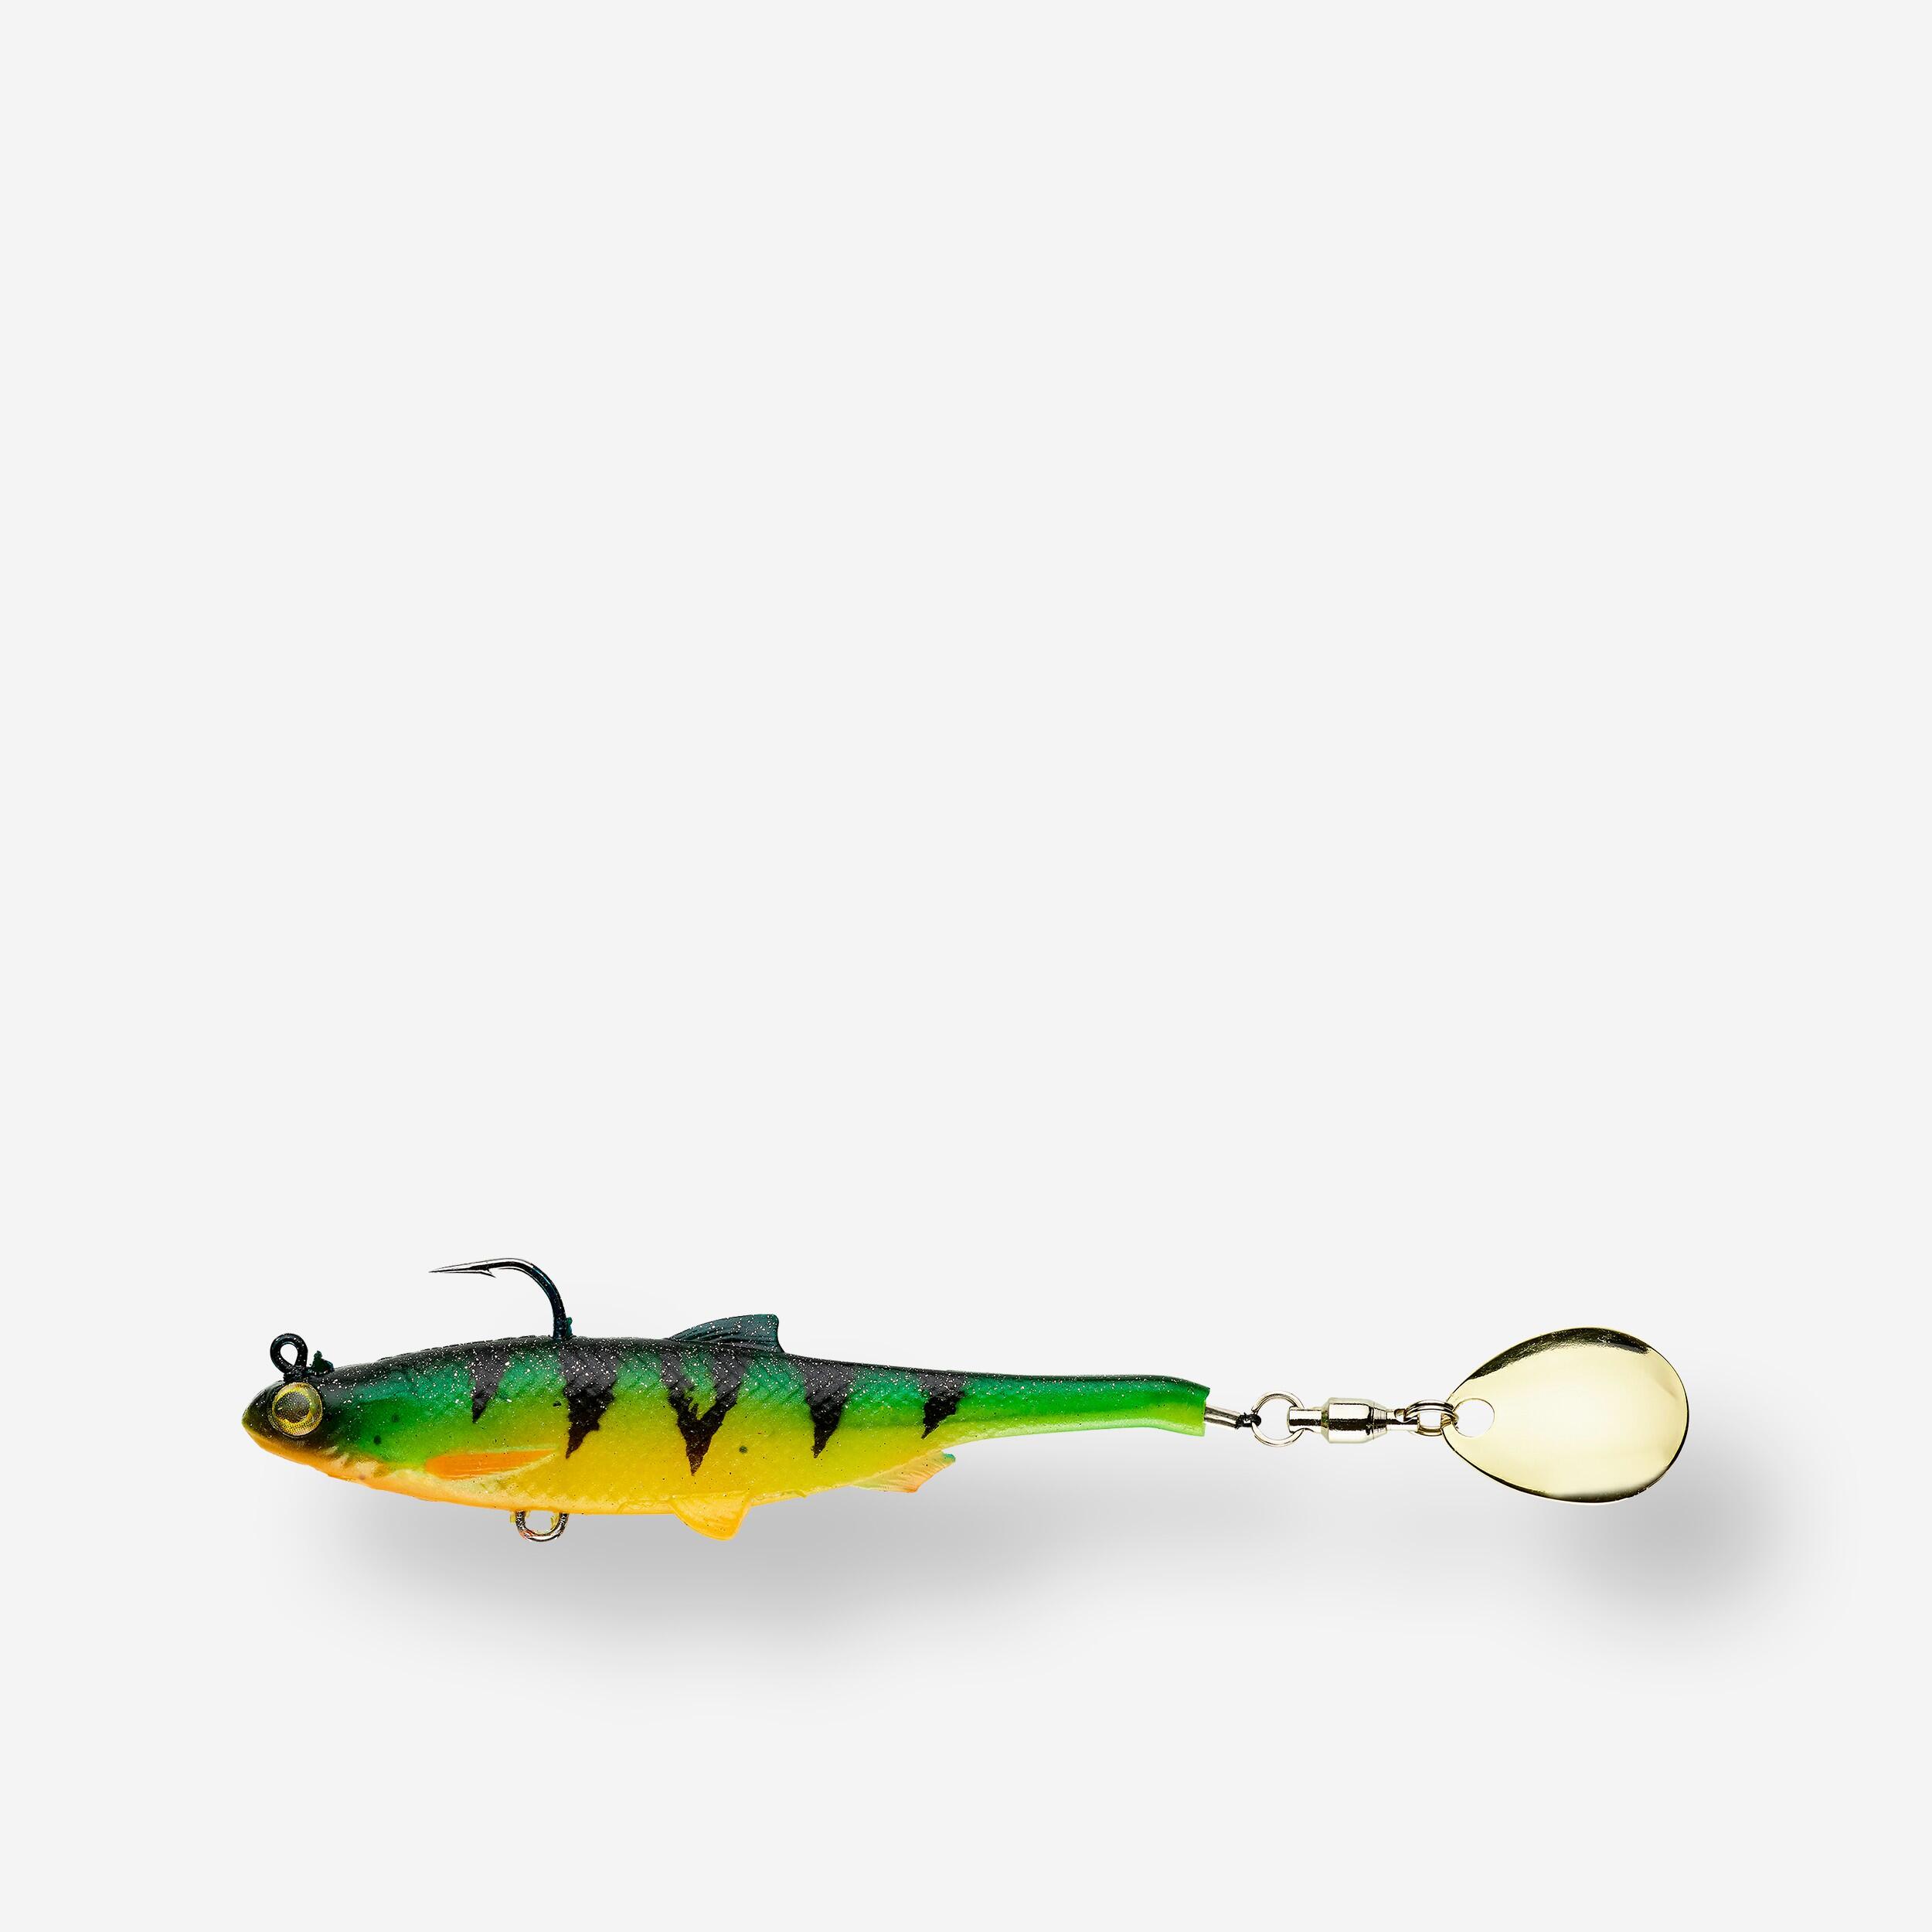 PLUG BAIT POPPER LURE FISHING PPR 50 F FIRETIGER - Fluo green